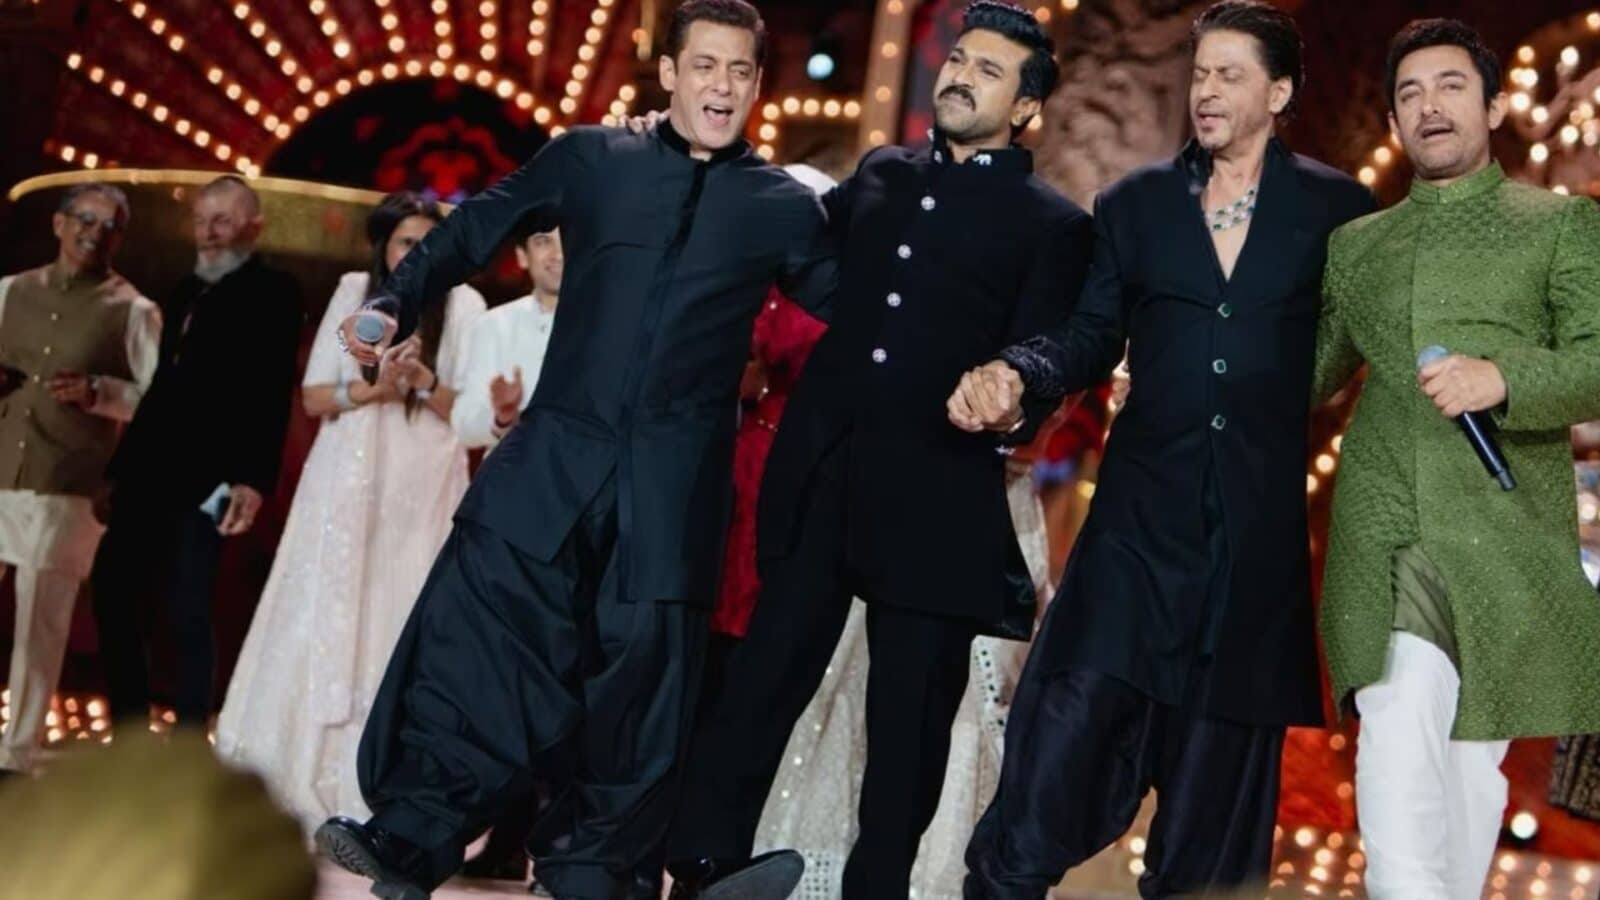 Ram Charan’s Makeup Artist Says Shah Rukh Khan’s Remark ‘Idly’ Was Disrespectful